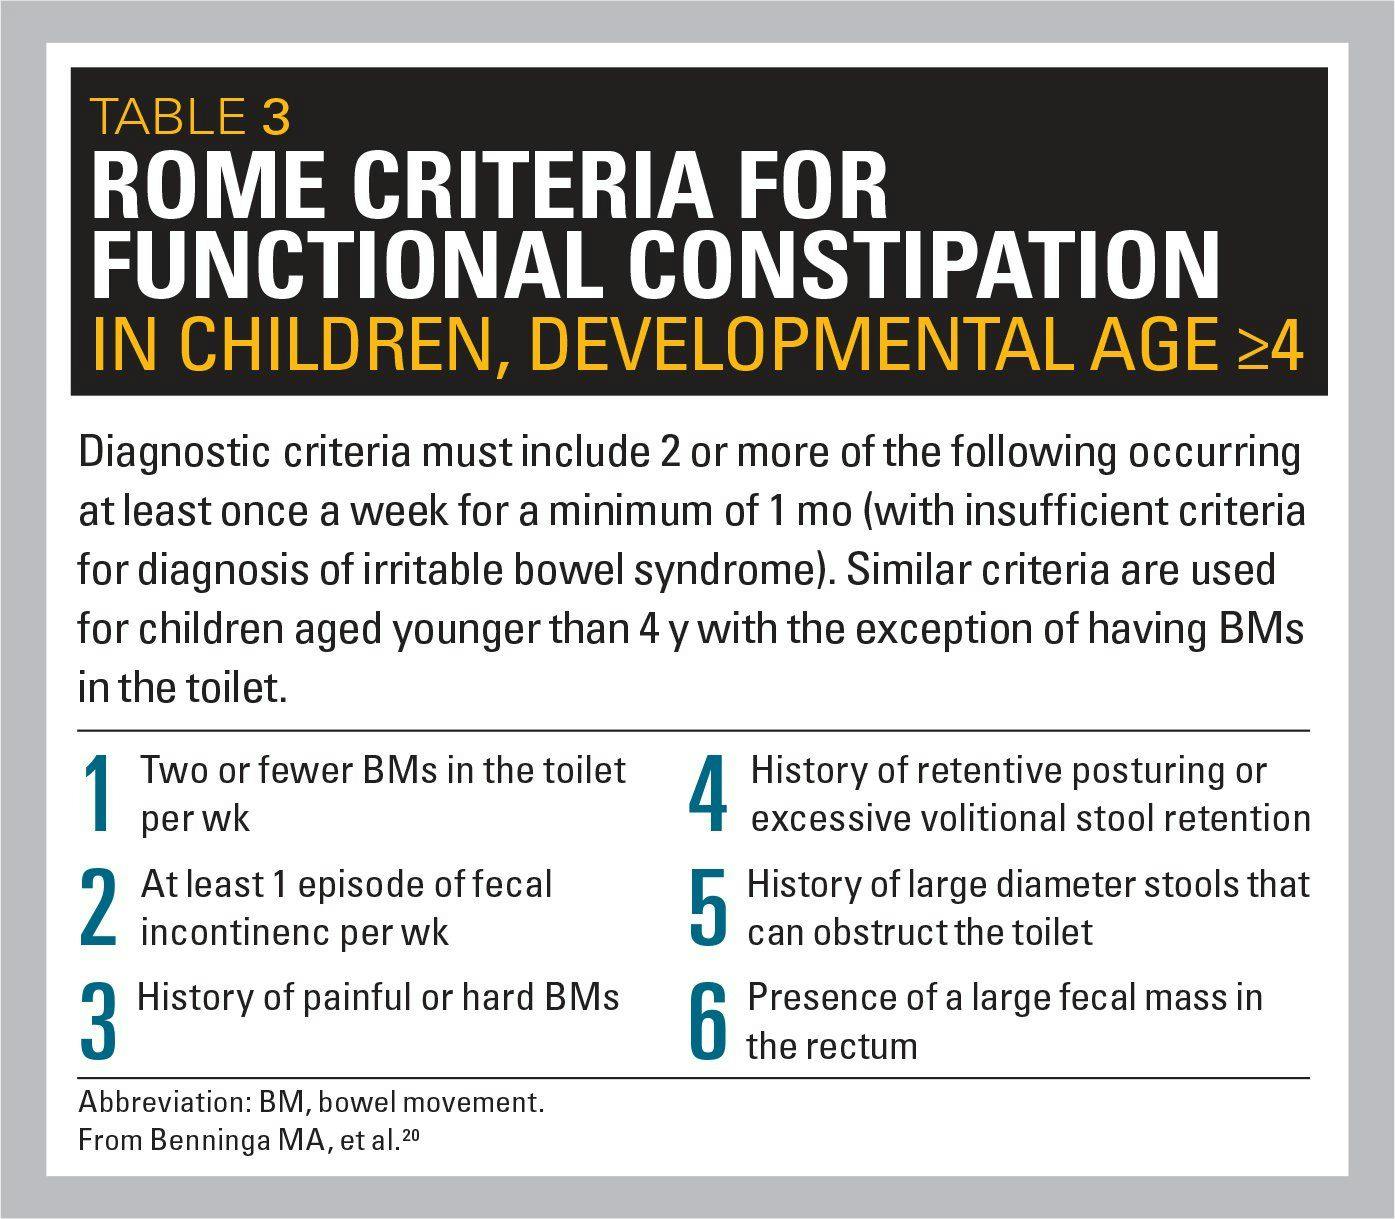 Rome criteria for functional constipation in children, developmental age > 4